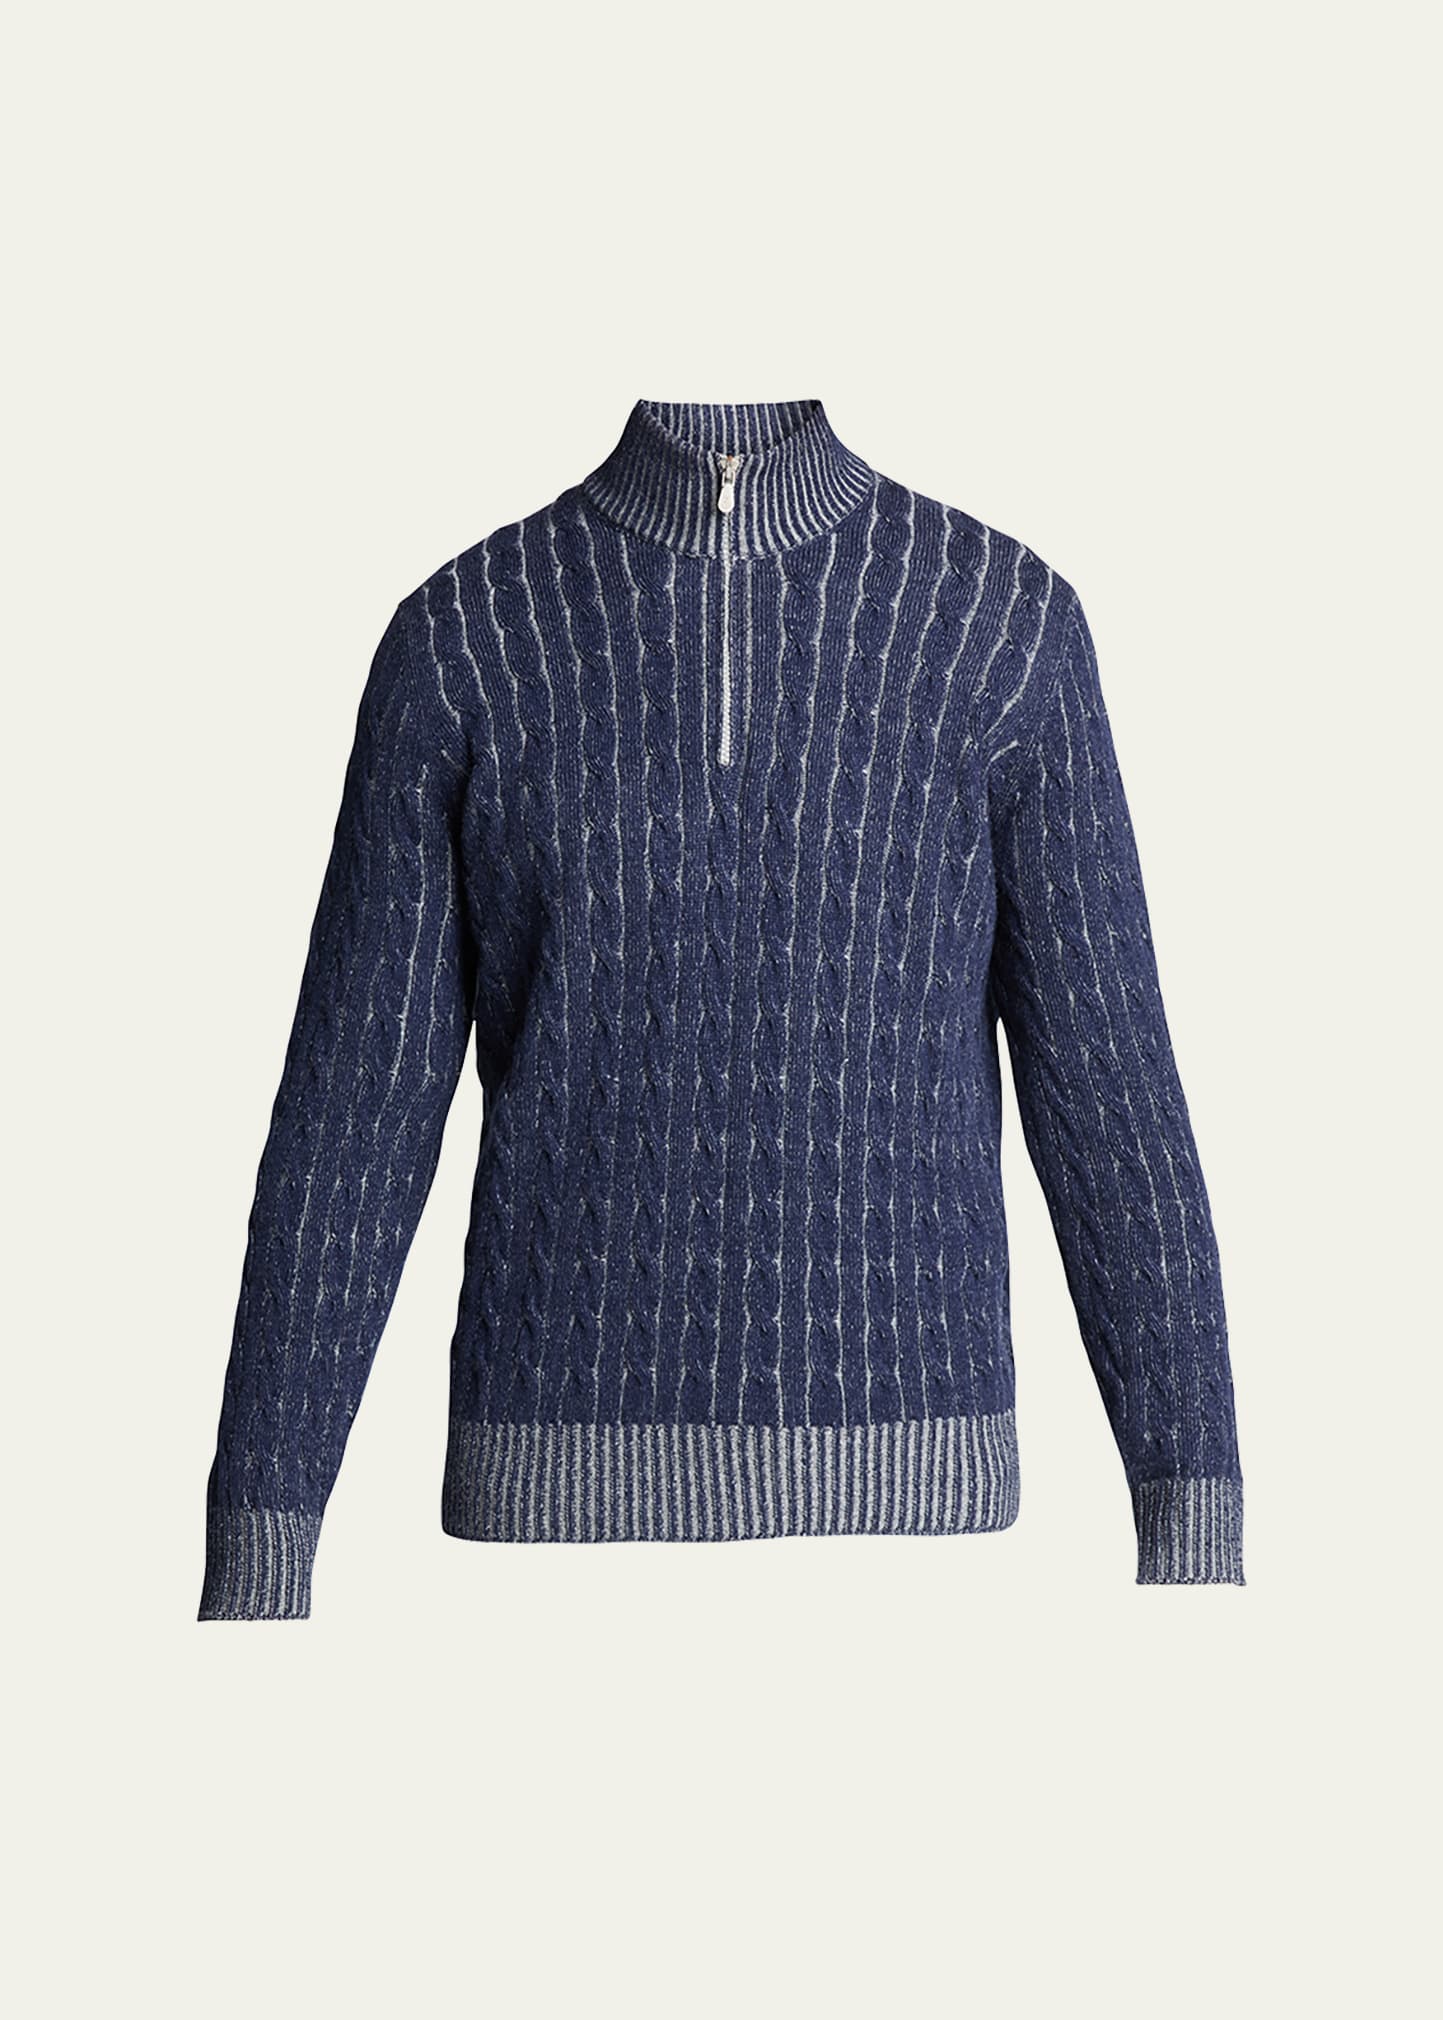 Brunello Cucinelli Sweater | bergdorfgoodman.com